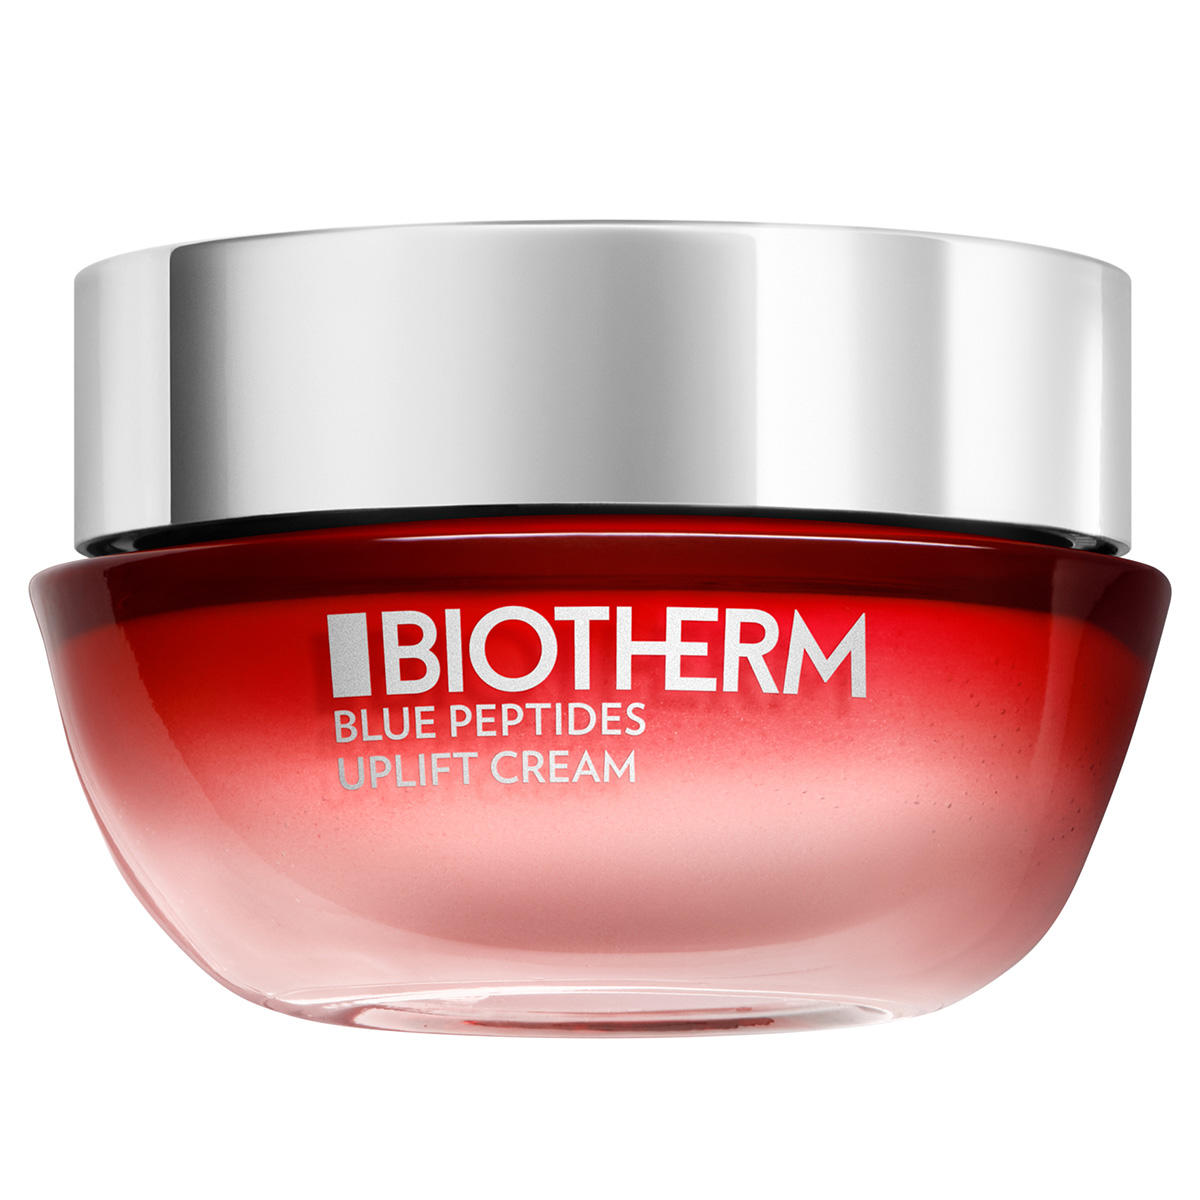 Biotherm Blue Peptides Uplift Cream  - 1